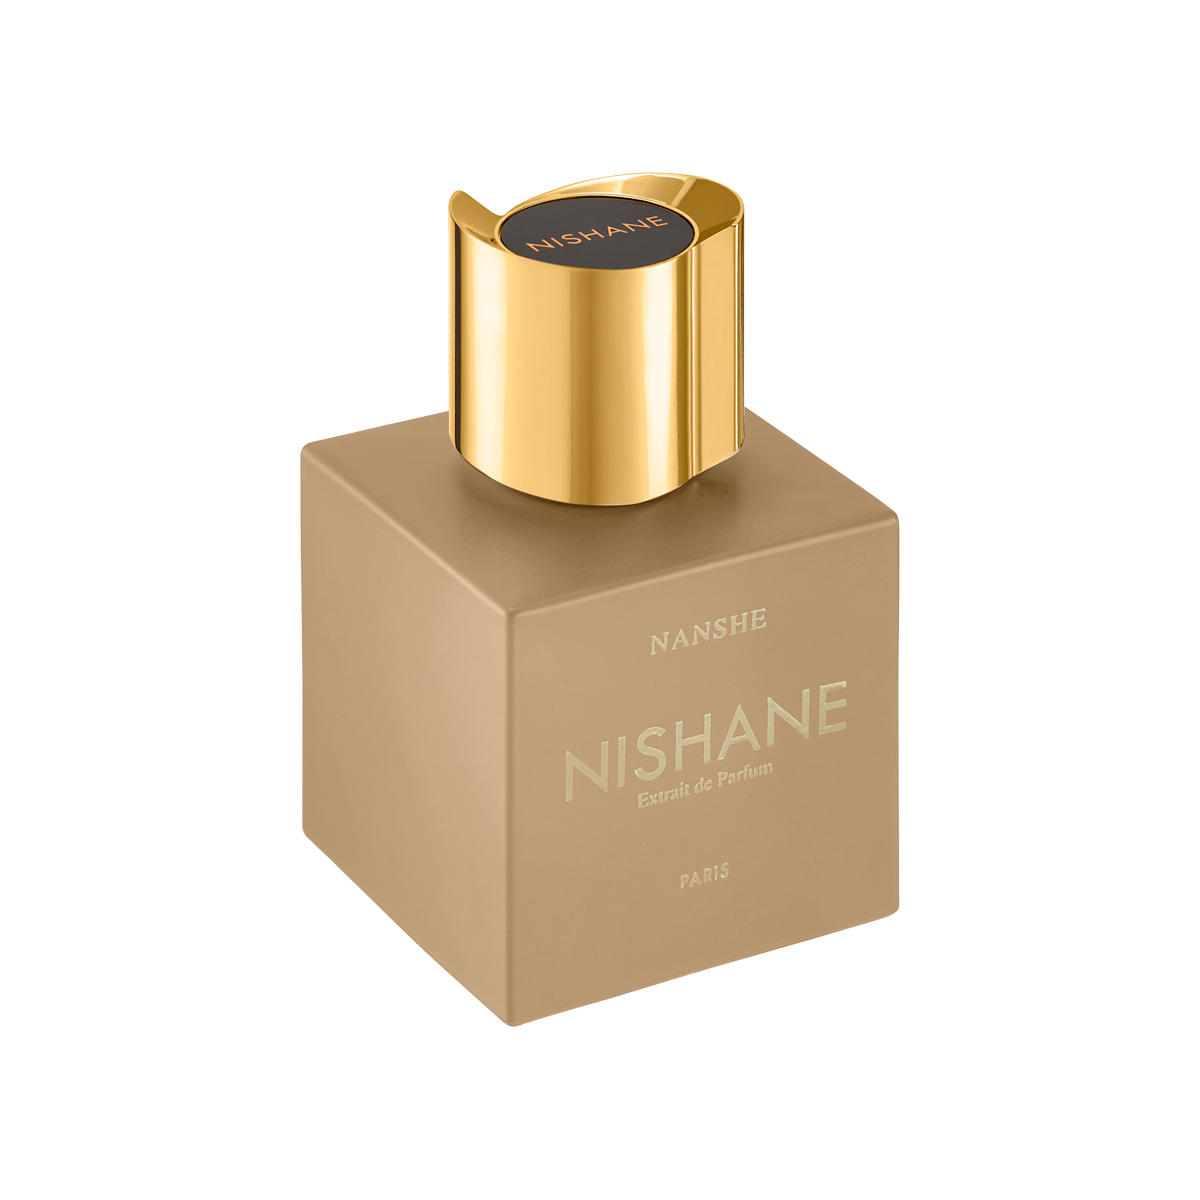 Nishane - Nanshe Extrait de Parfum